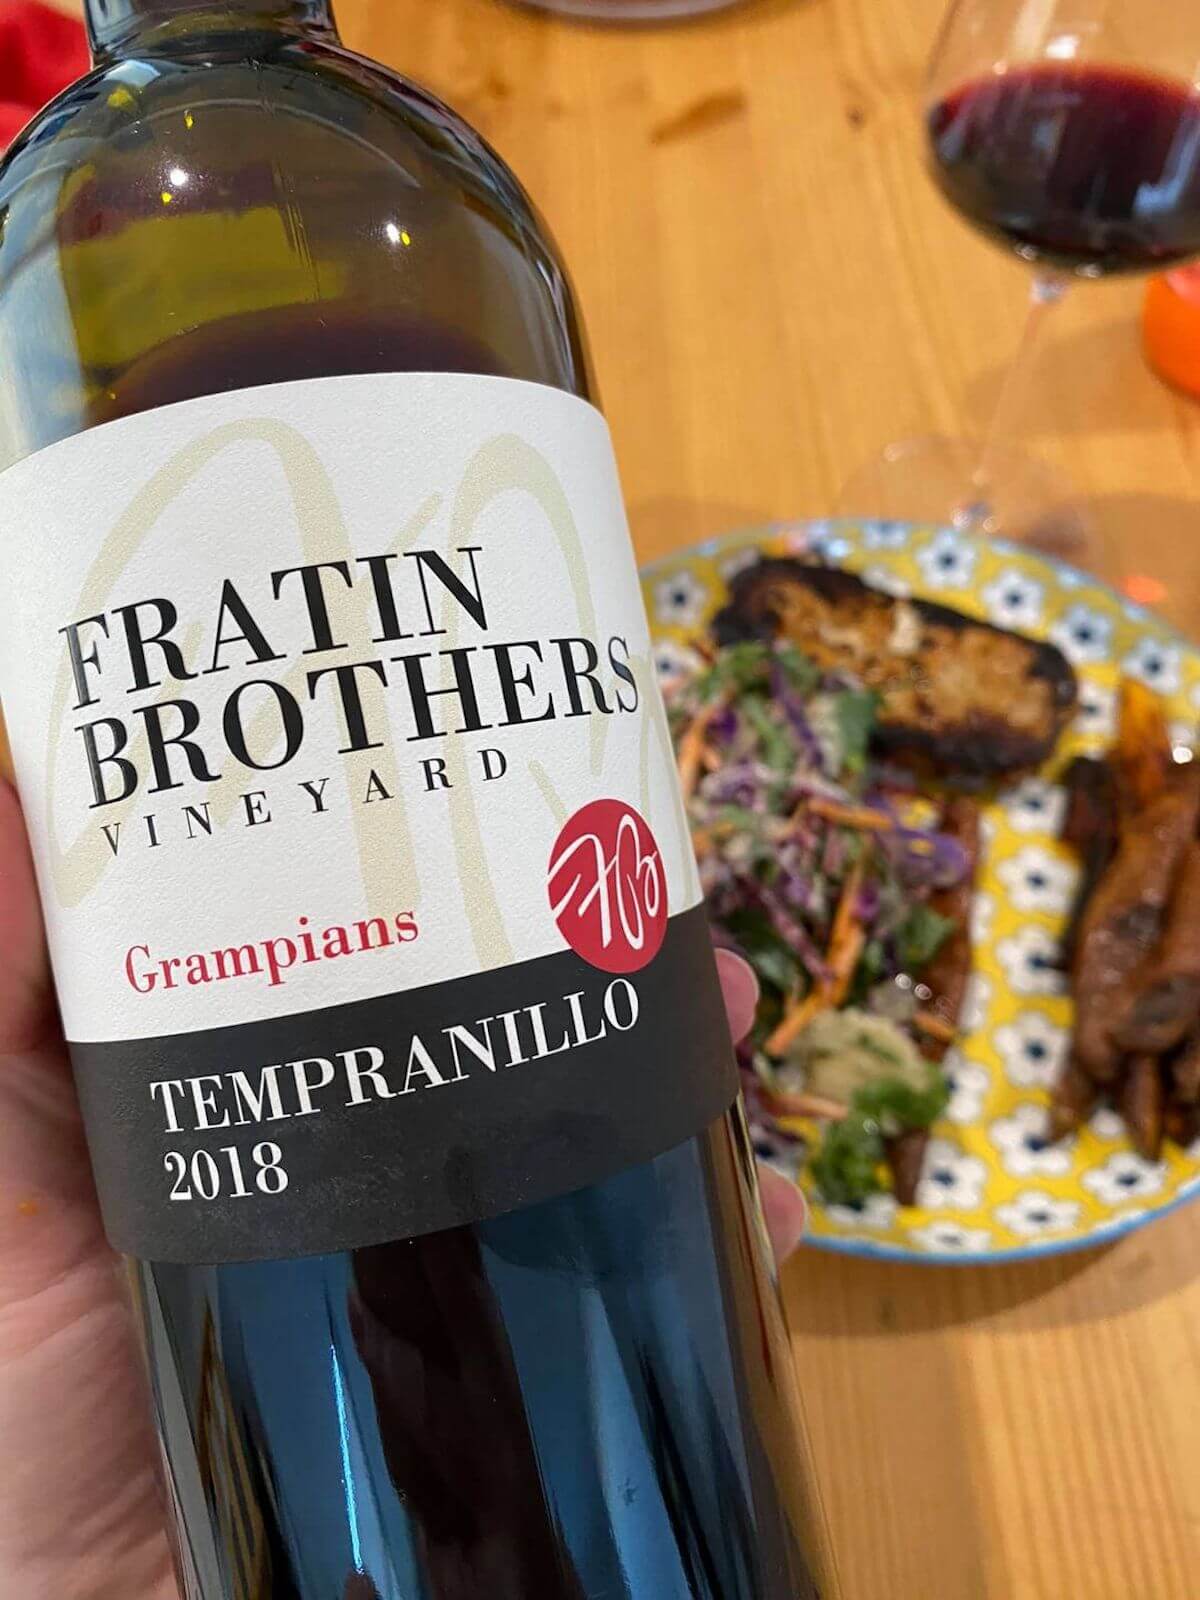 Fratin Brothers Tempranillo 2018 – Grampians